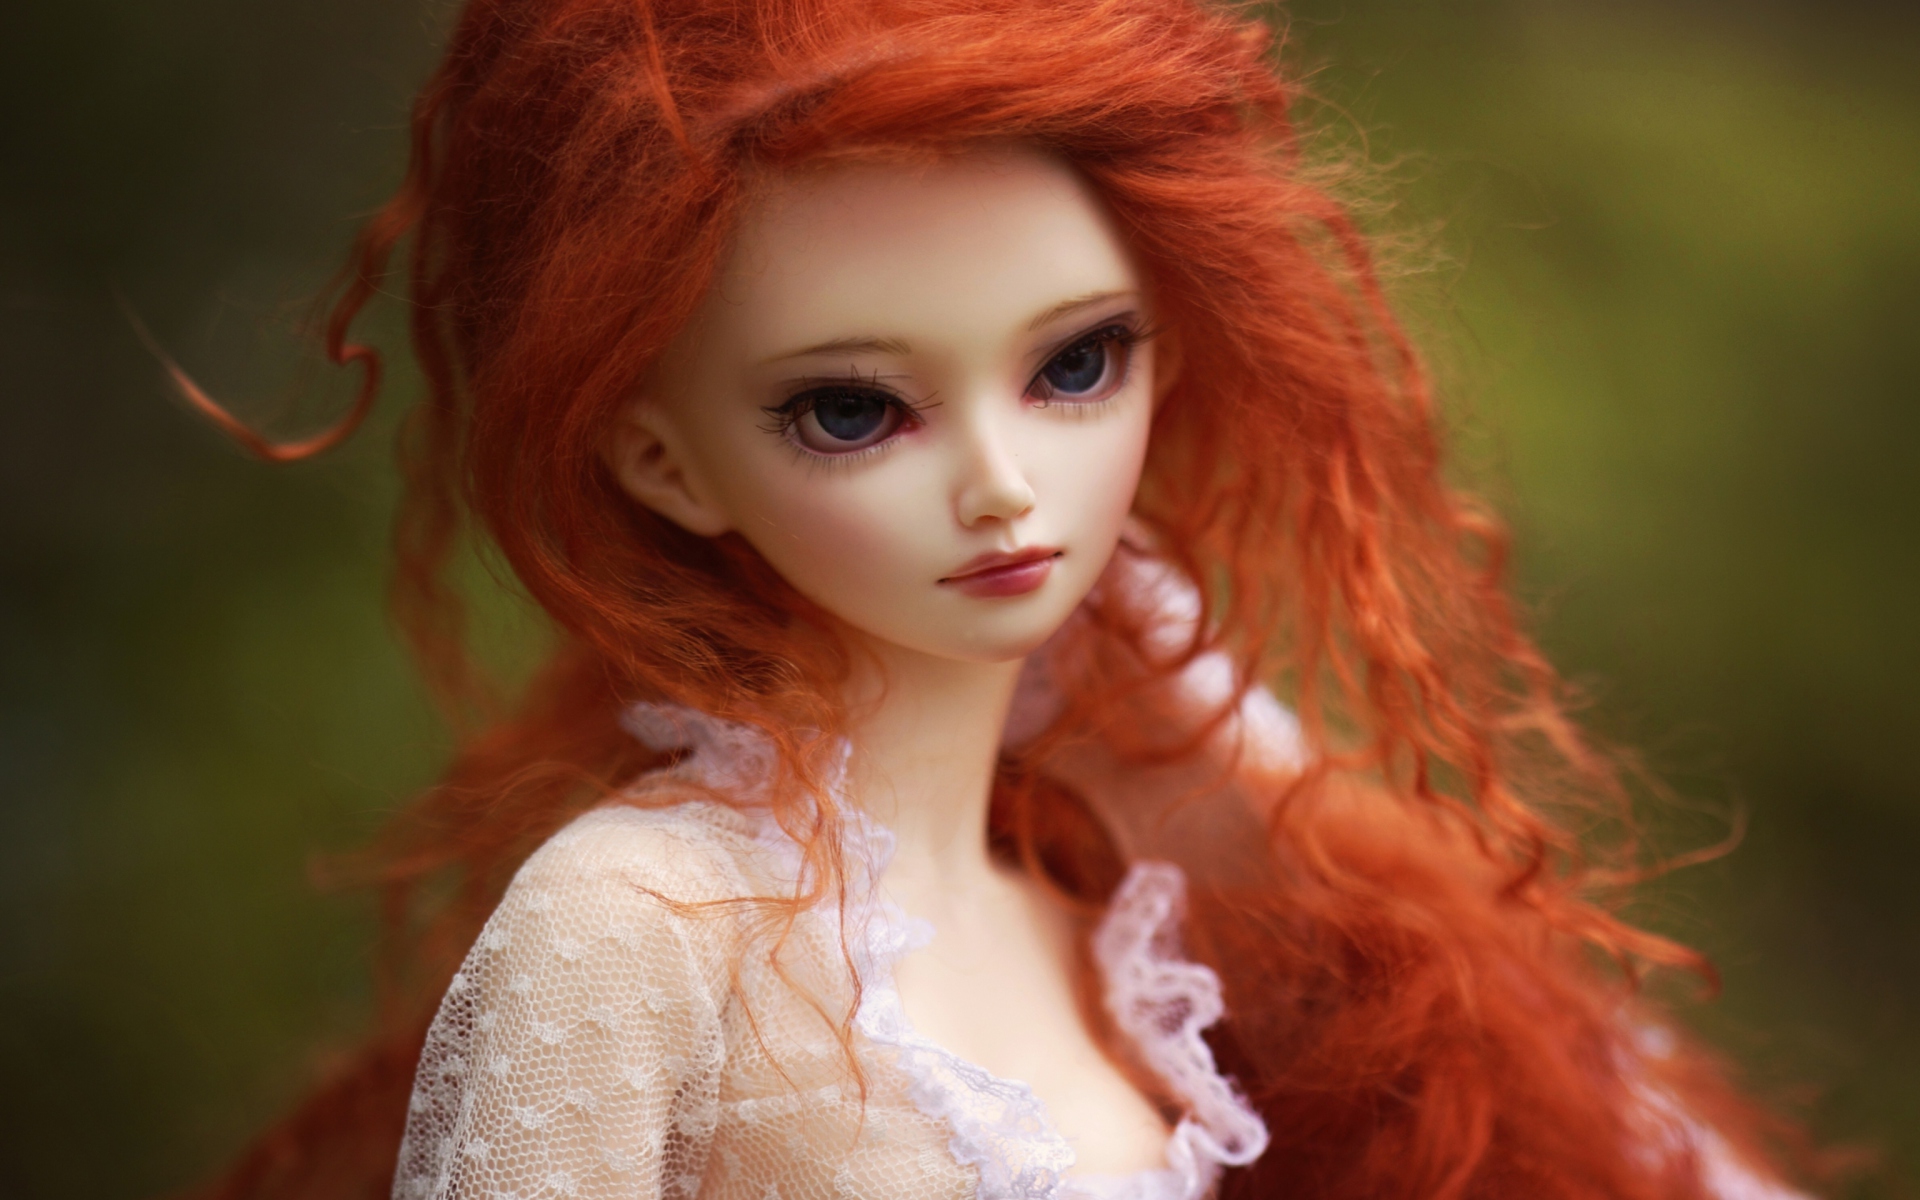 Gorgeous Redhead Doll With Sad Eyes wallpaper 1920x1200